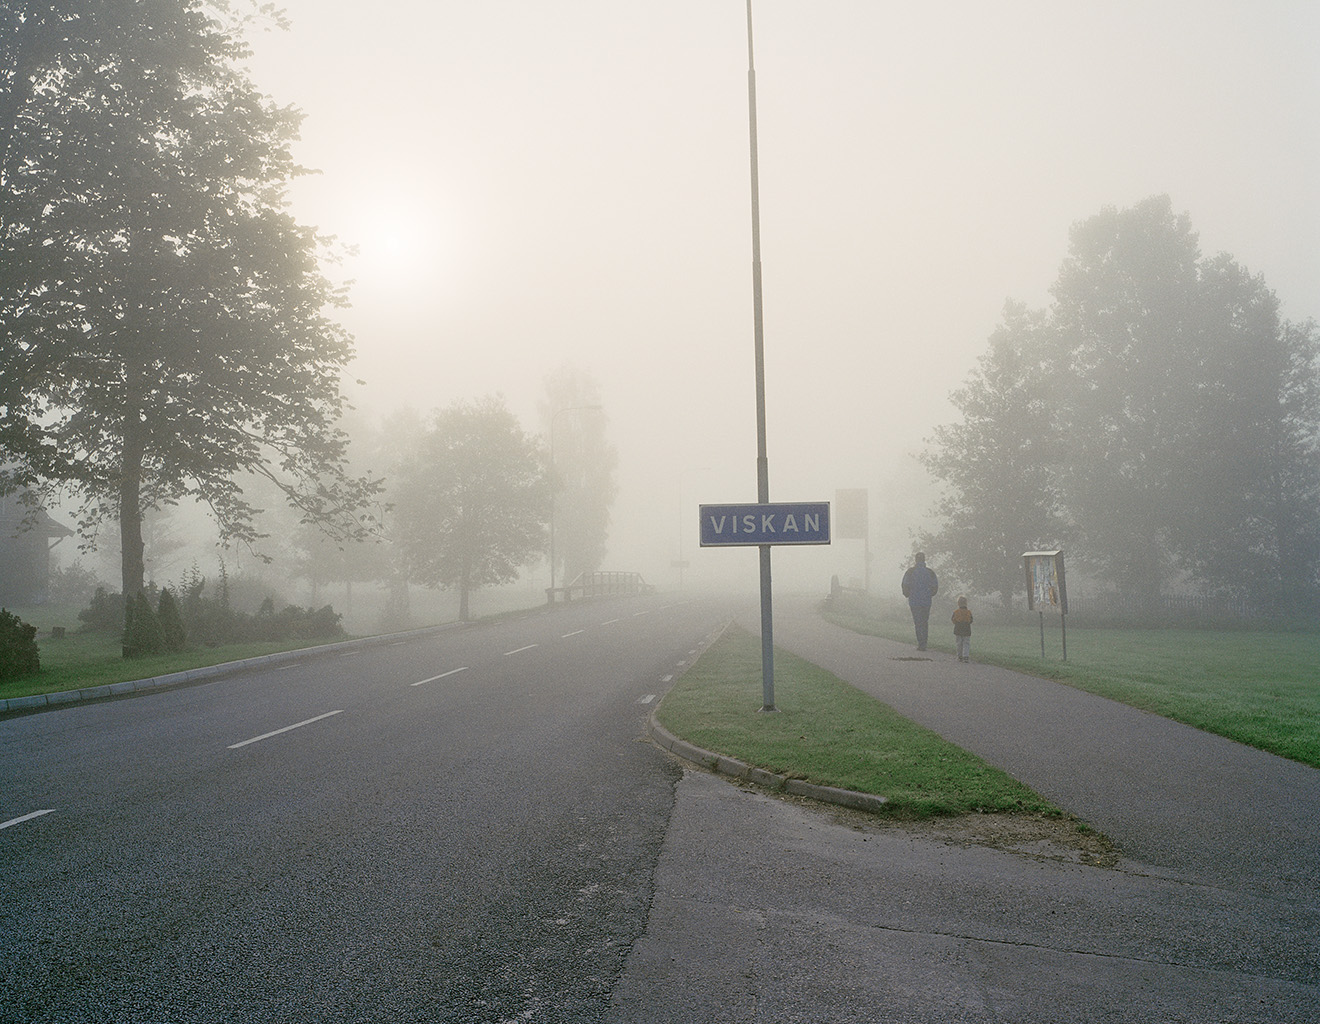 On the way to school, Hökerum, September 2004